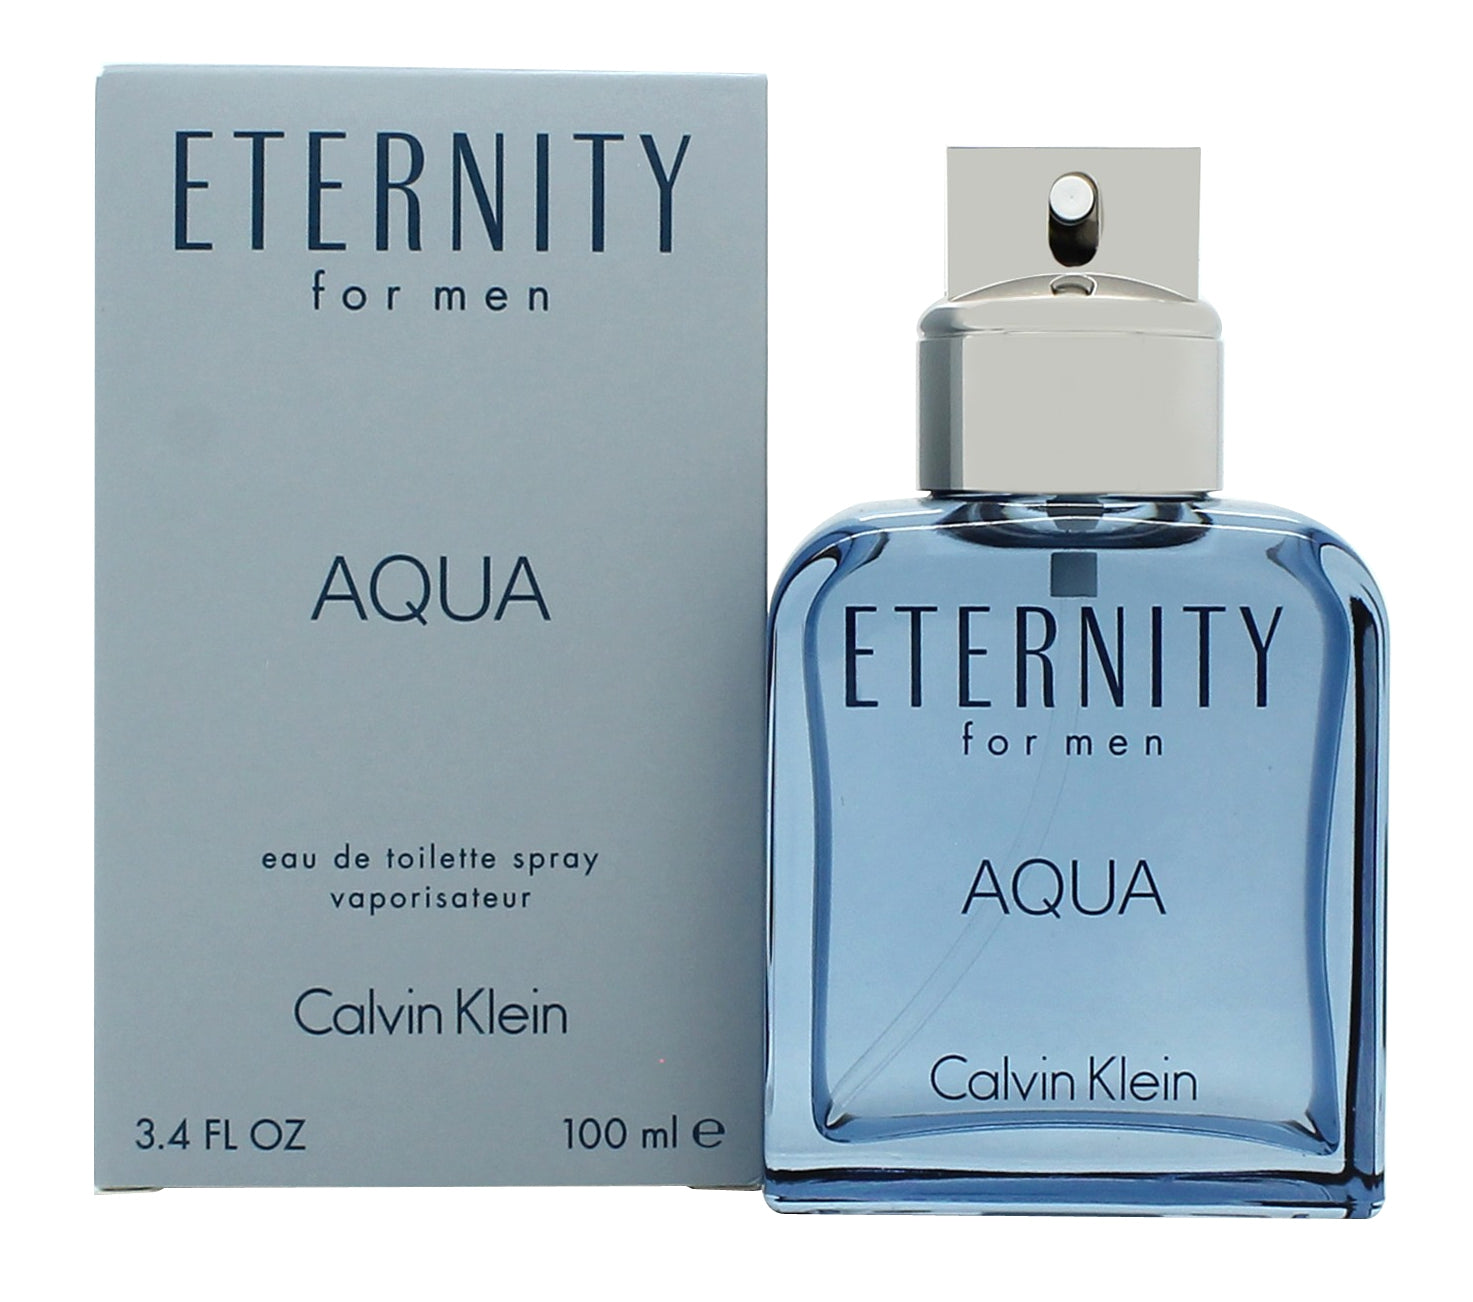 View Calvin Klein Eternity Aqua Eau de Toilette 100ml Spray information